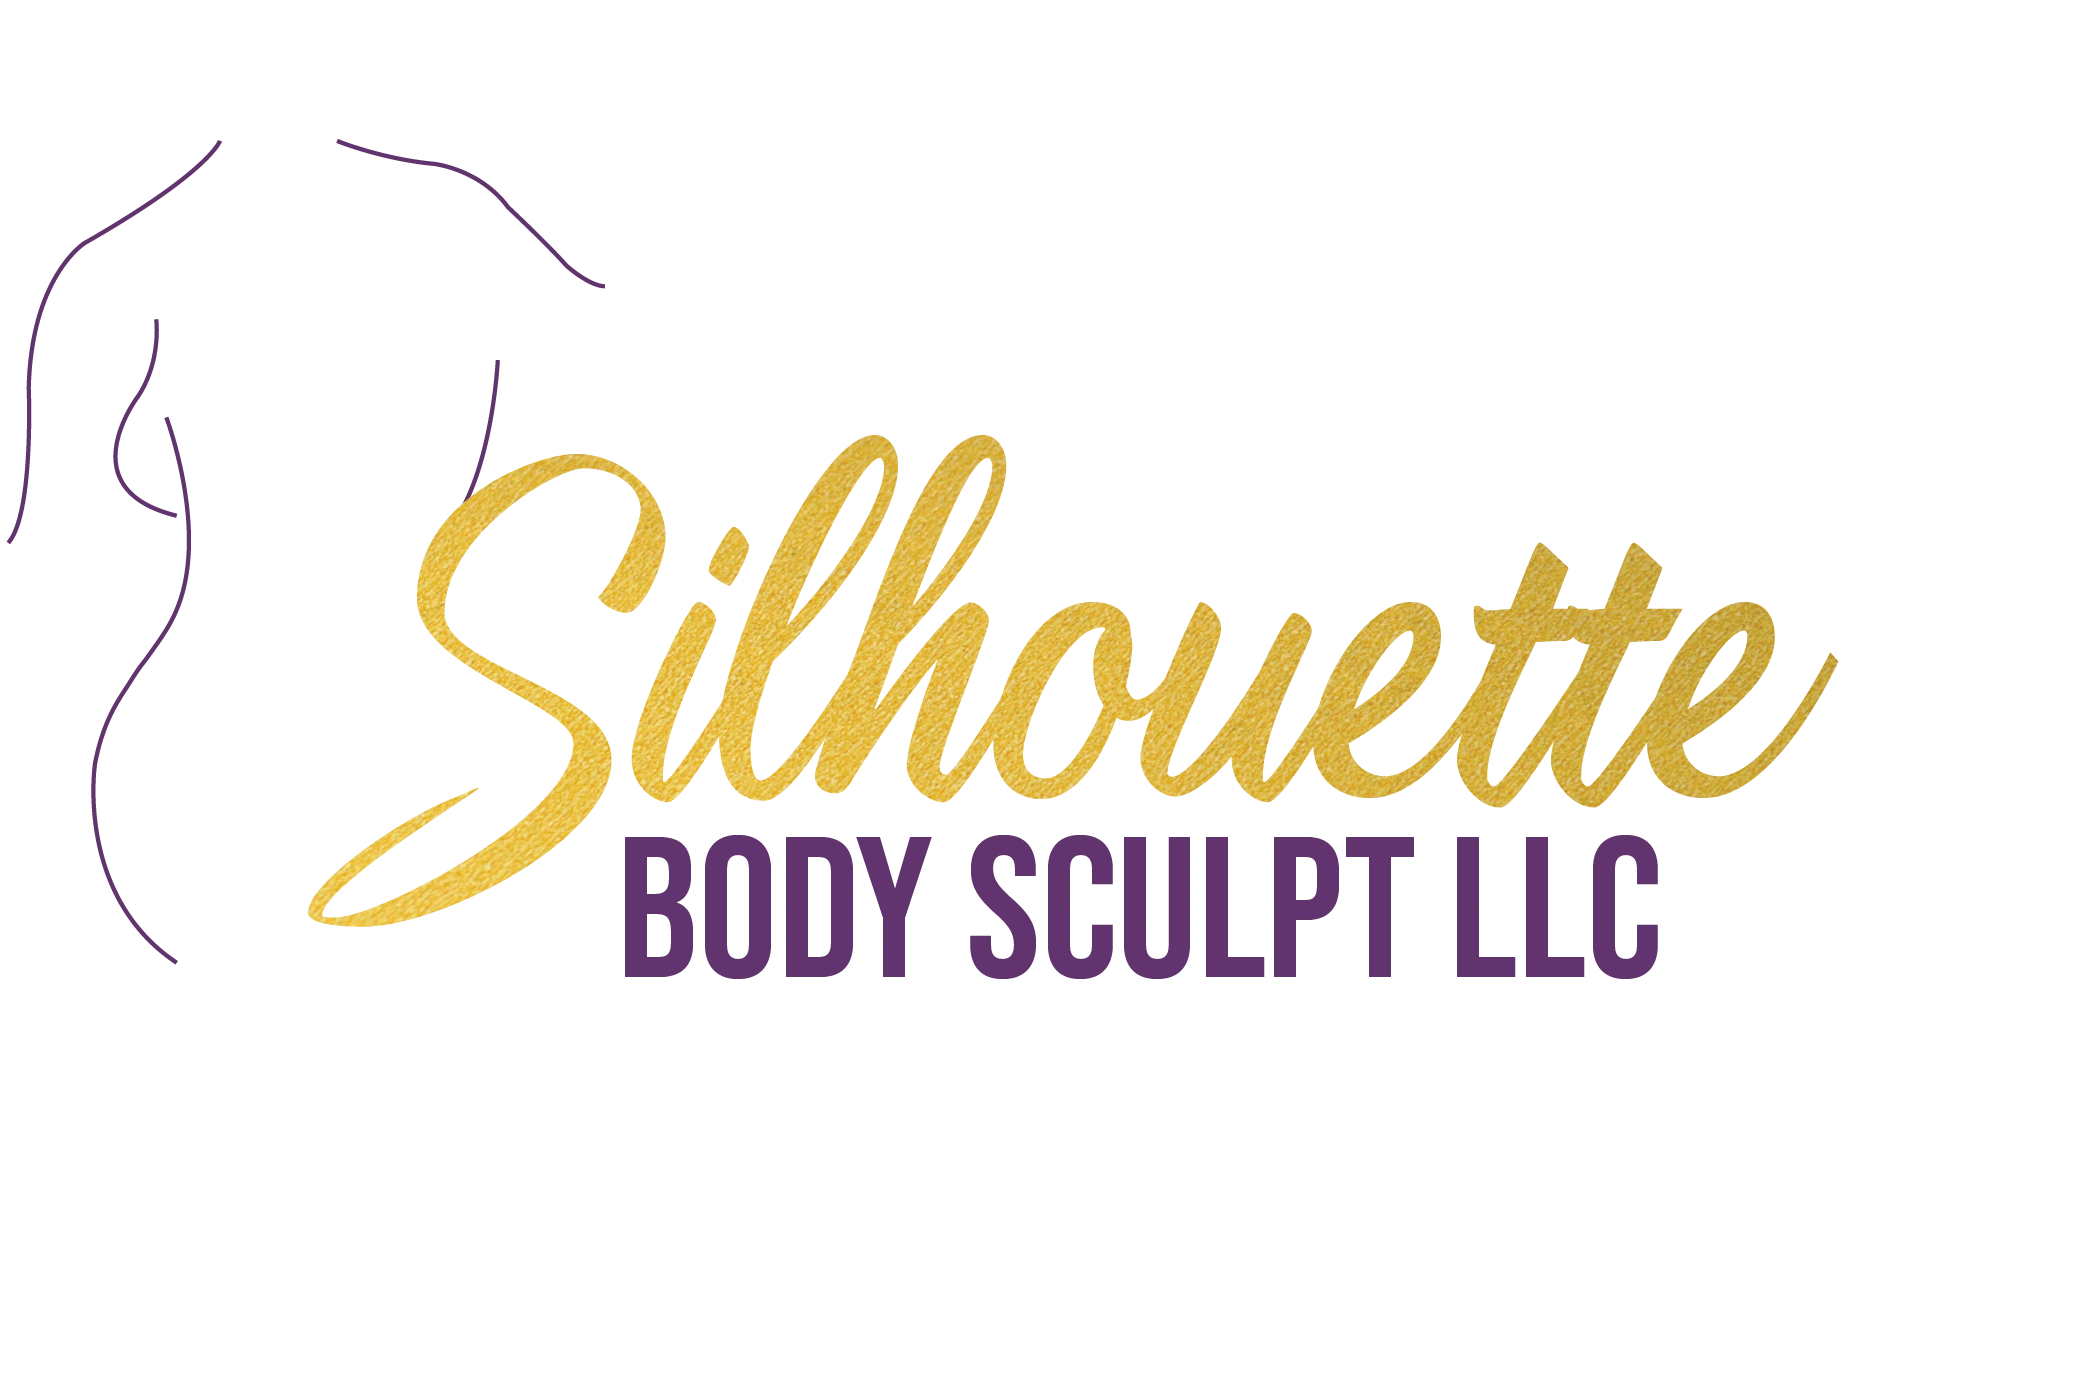 Silhouette Body Sculpt, LLC